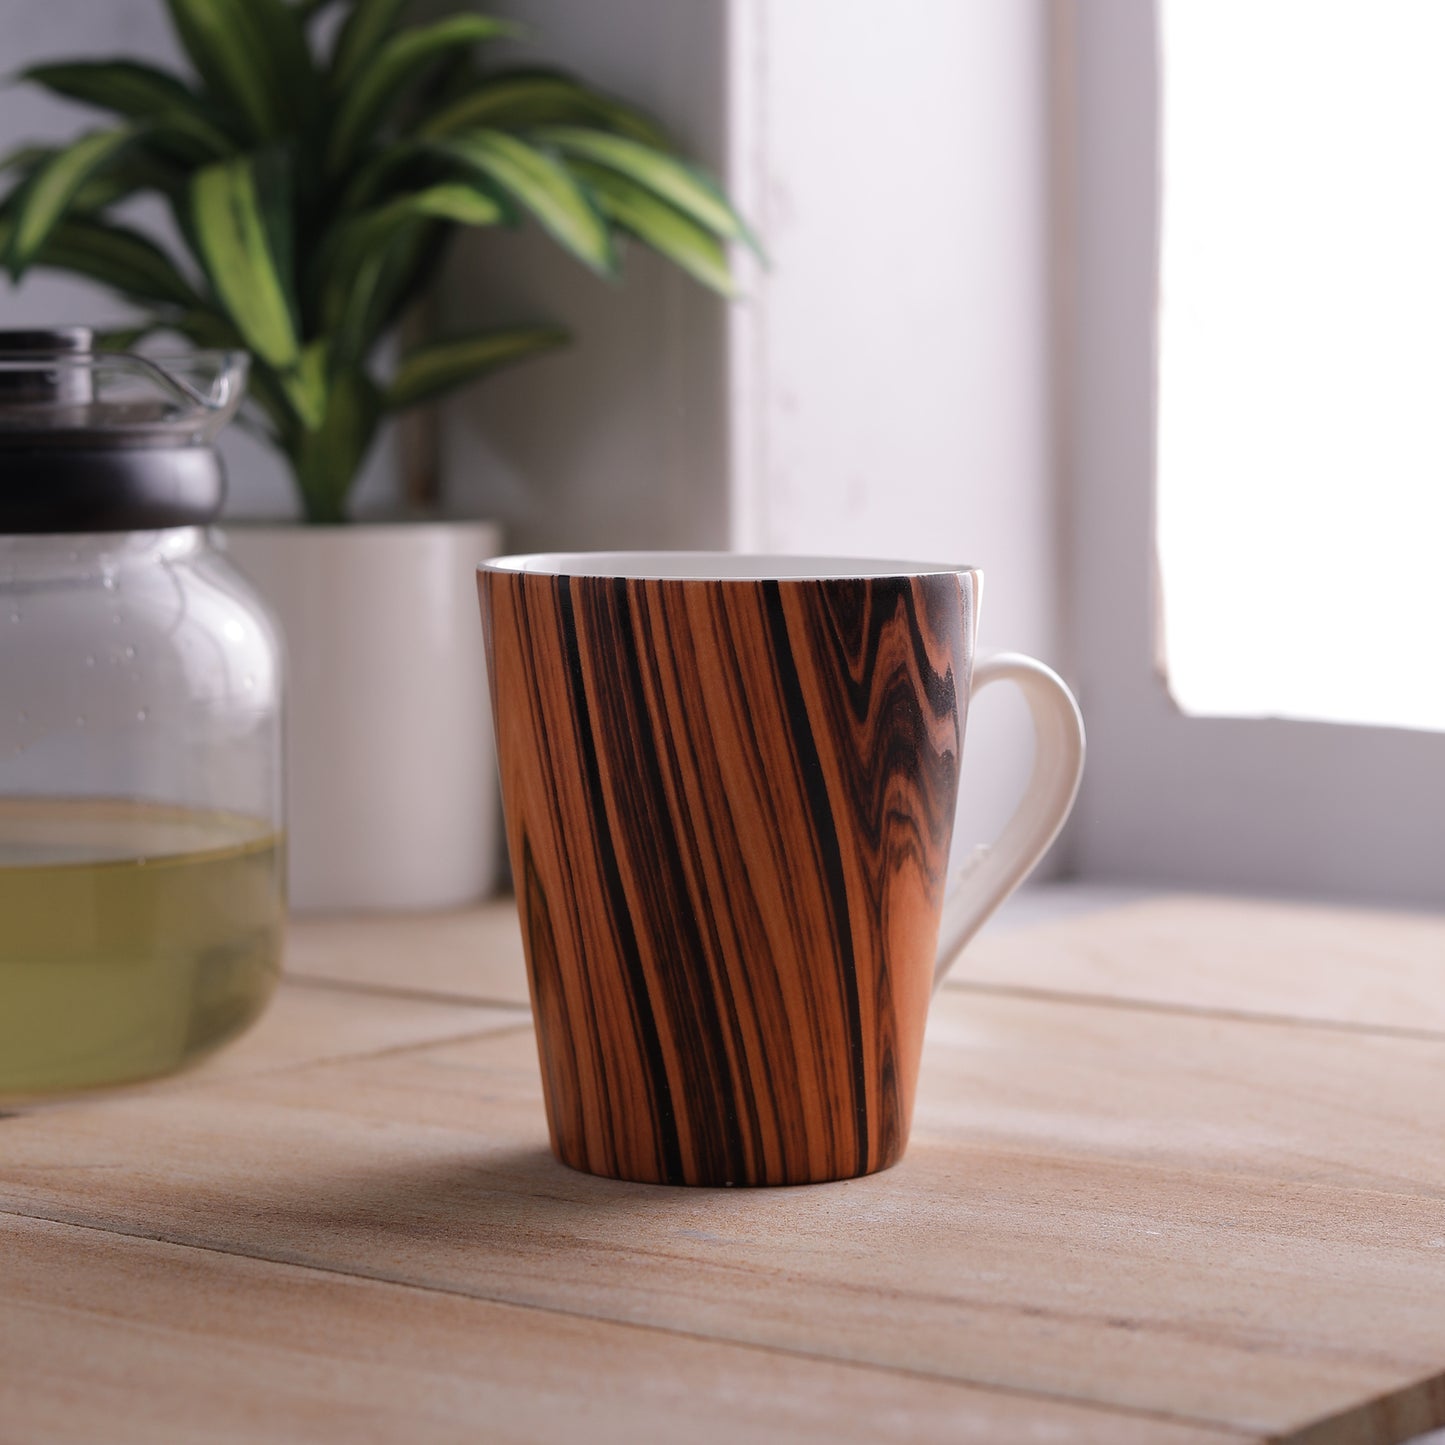 Zing Nature Coffee & Milk Mug, 340ml, 1 Piece (N401)